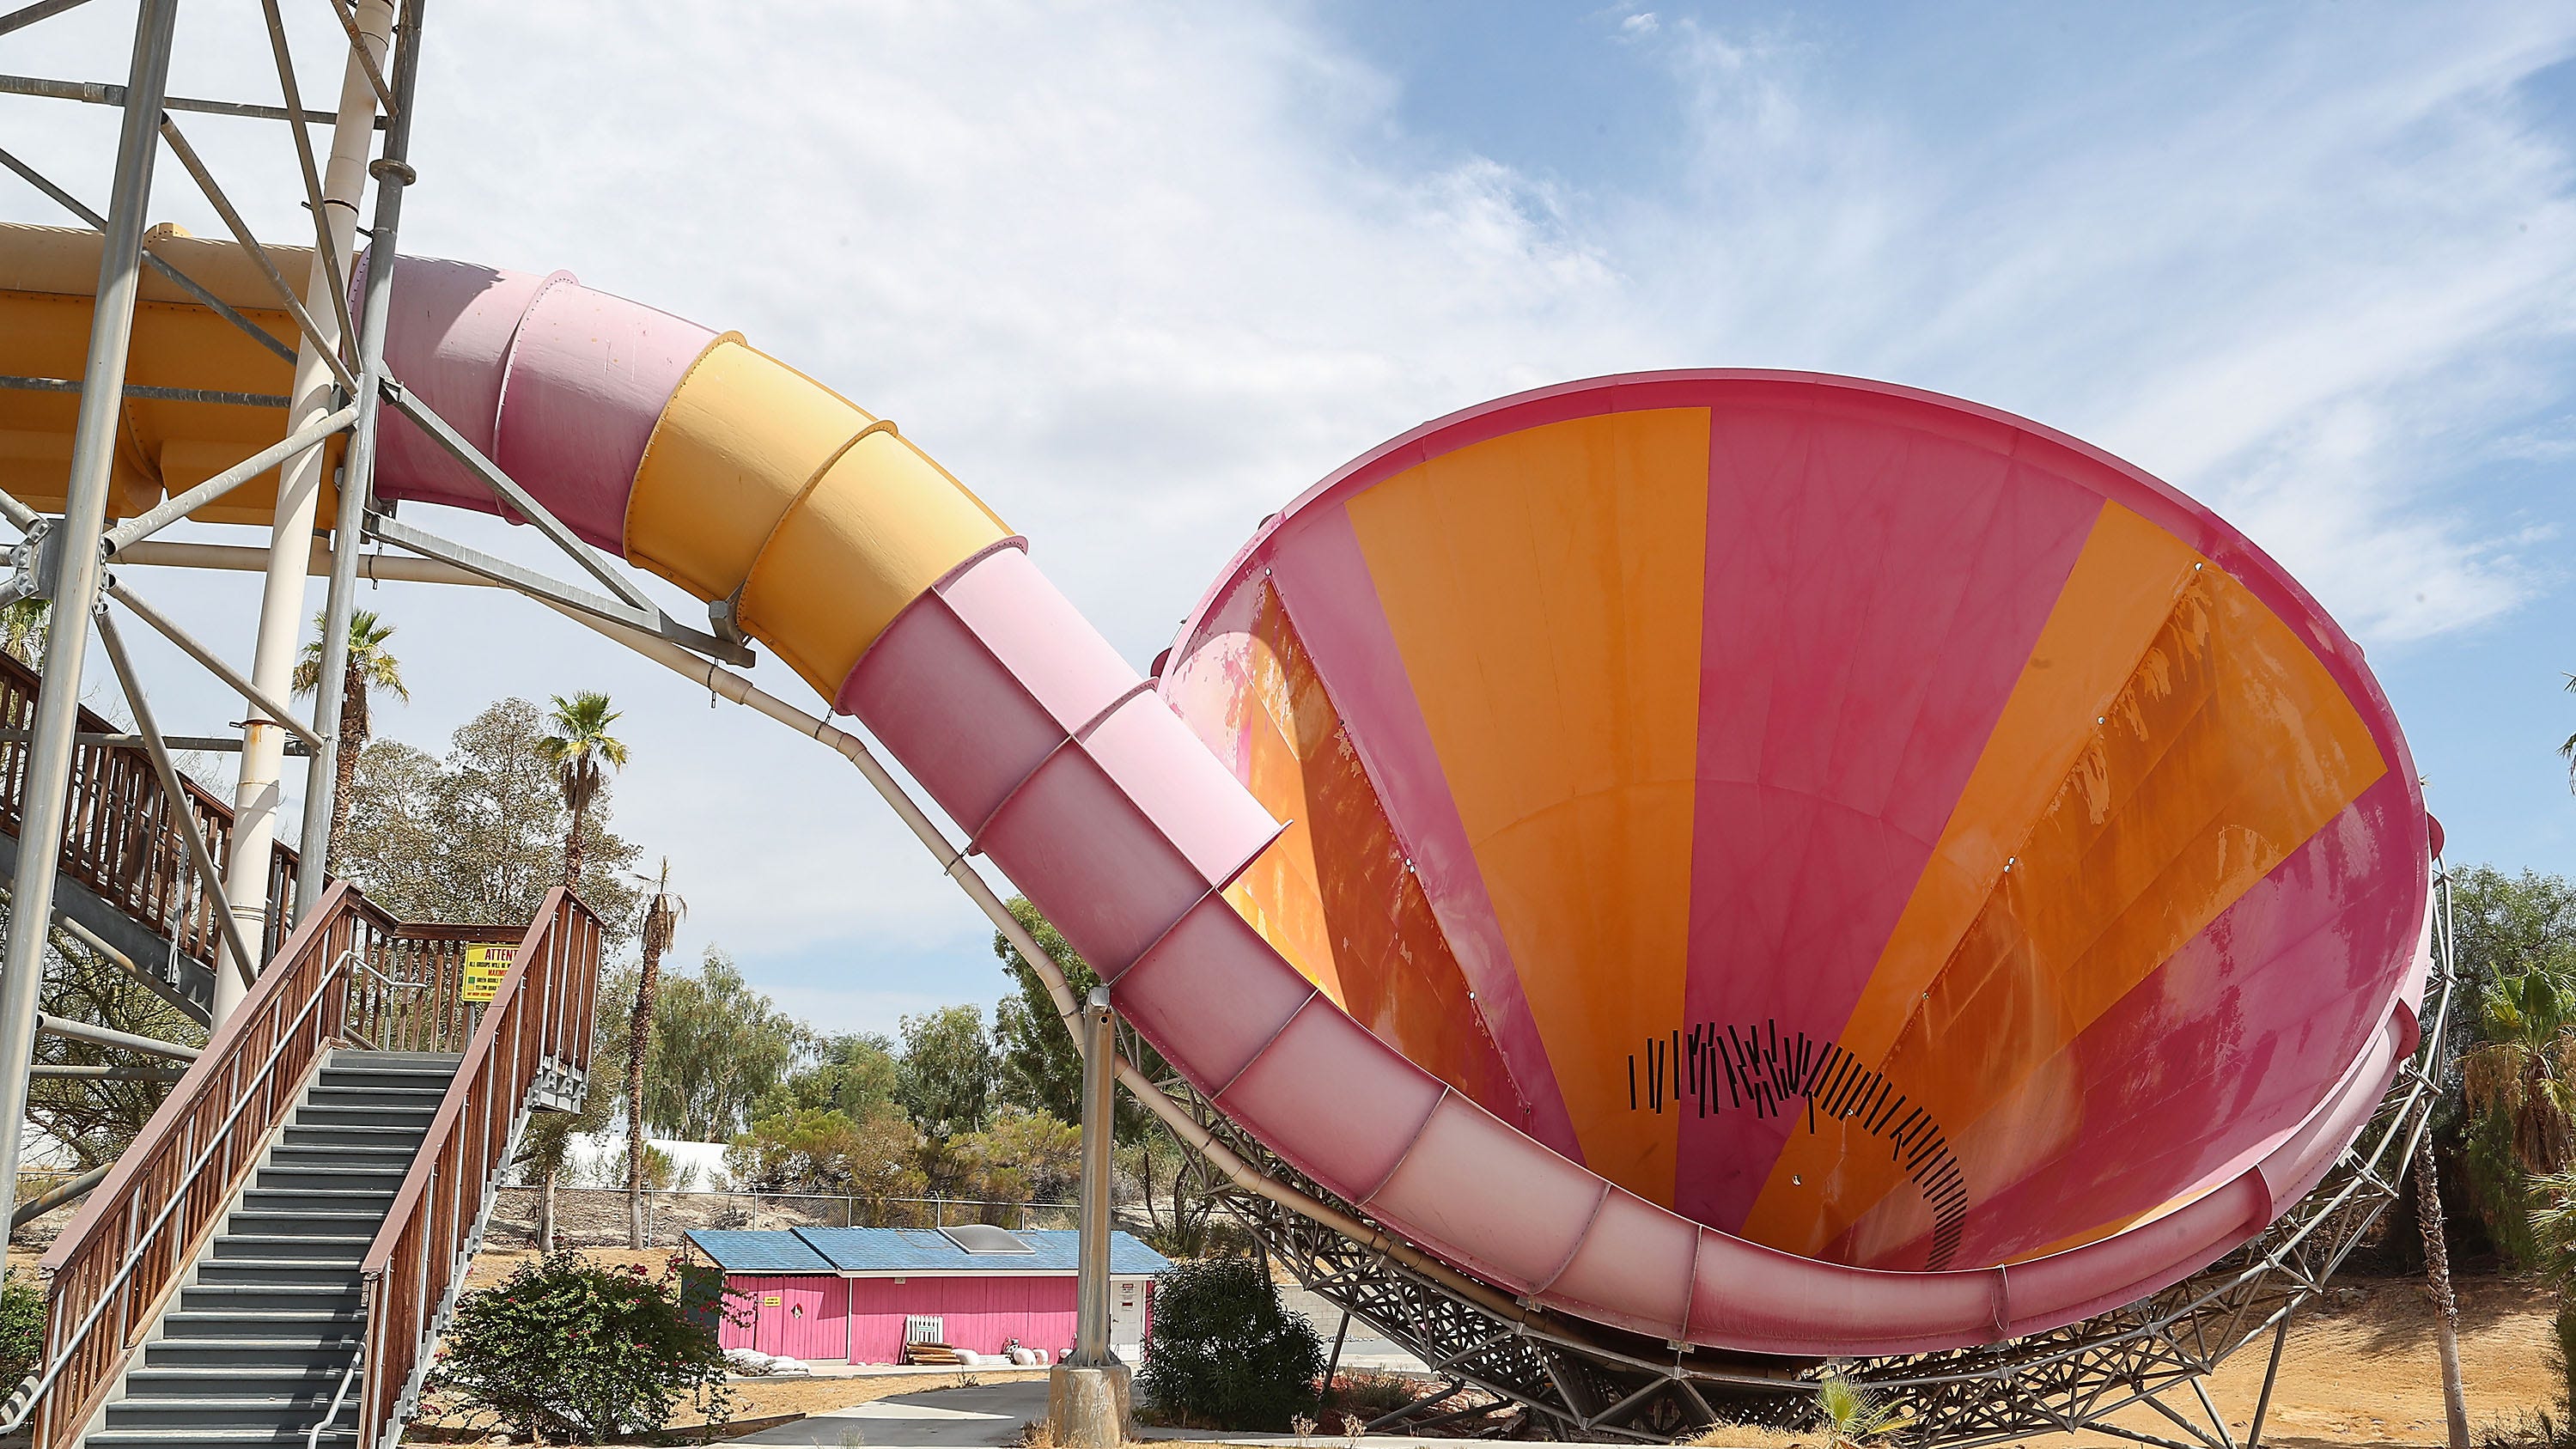 Palm Springs Shuttered Wet N Wild Water Park A Skateboarder S Dream